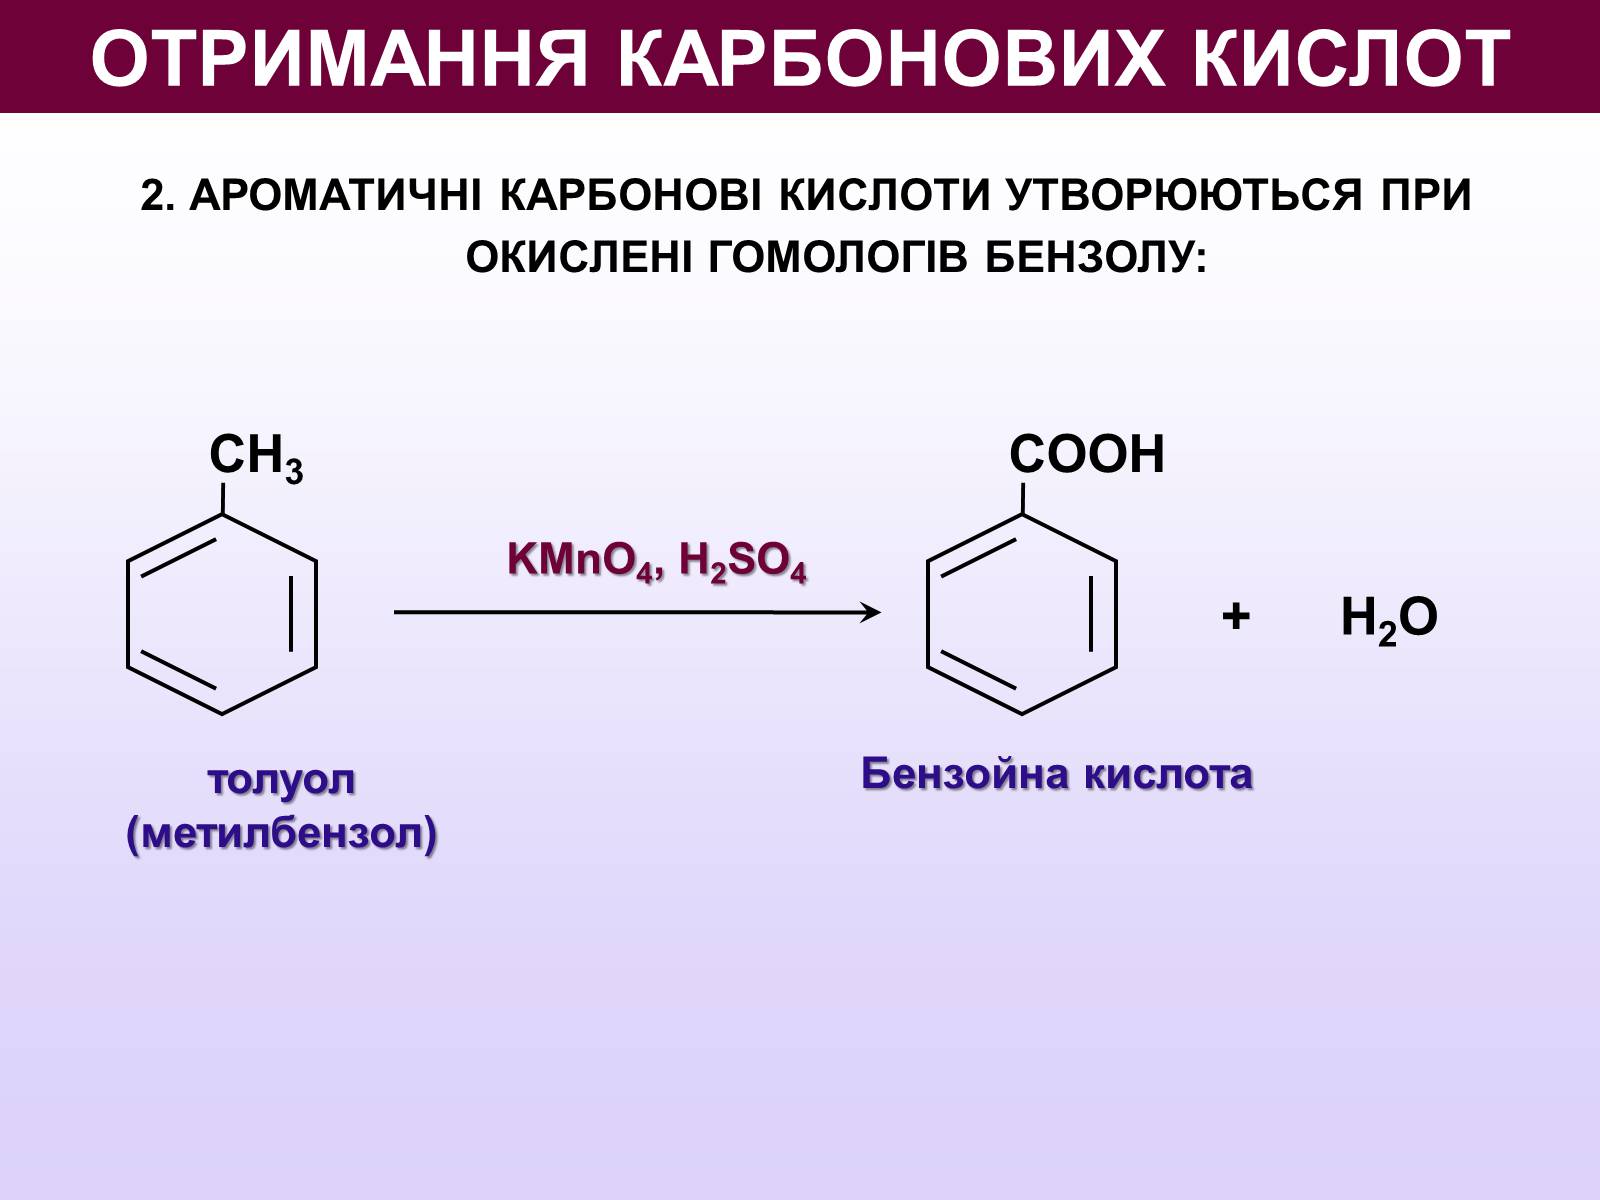 Бензойная кислота h. Толуол kmno4. Метилбензол c8h10. Окисление толуола kmno4. Бензойная кислота из толуола kmno4.